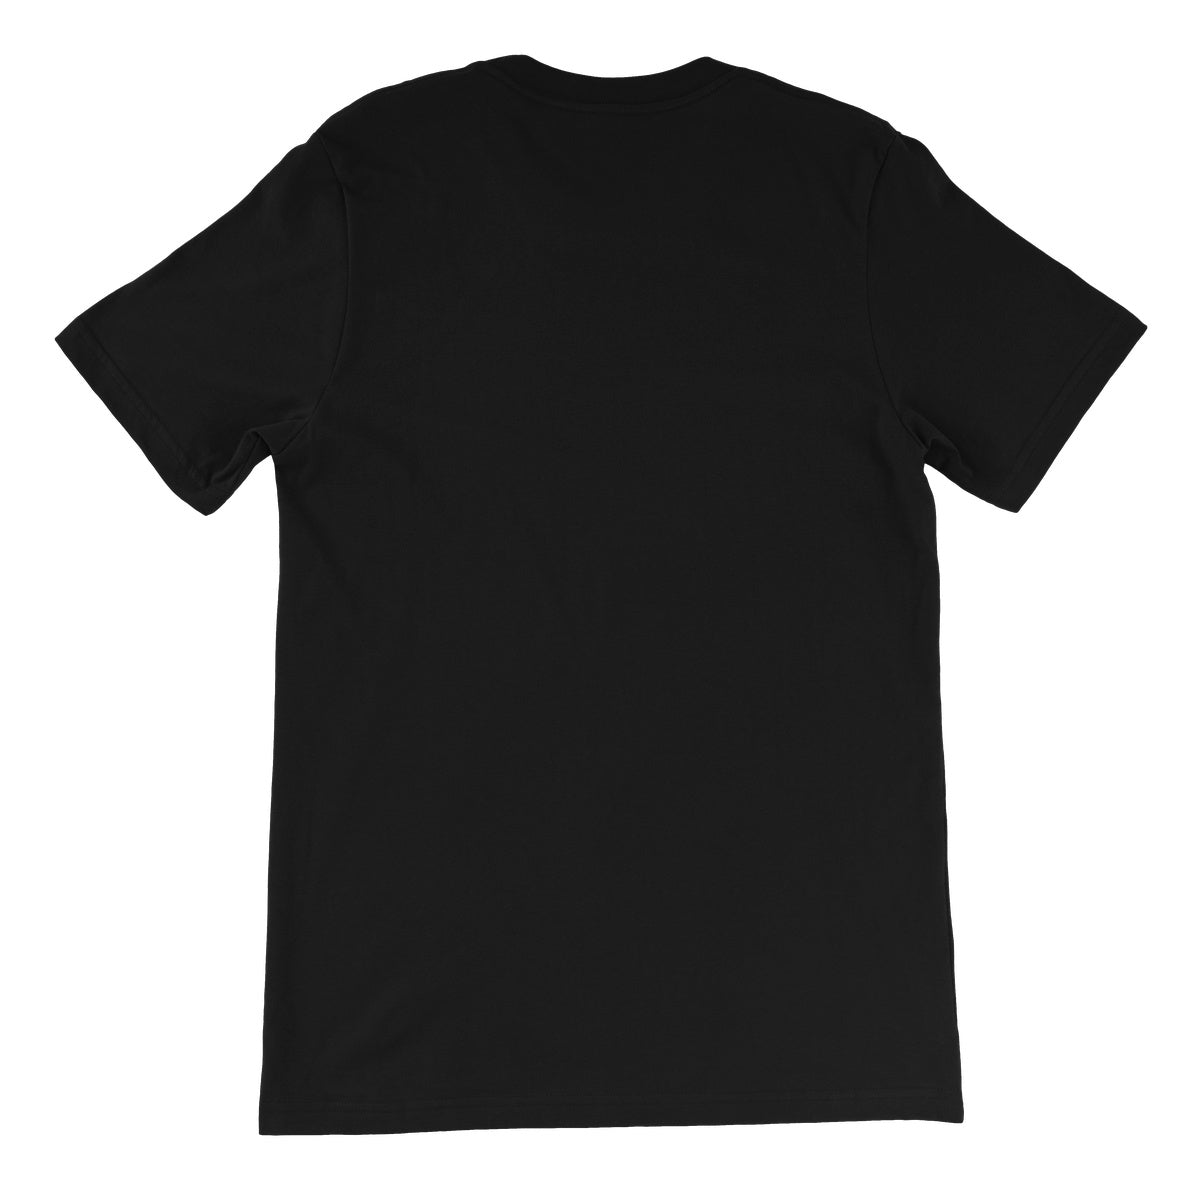 "The Wembley Kid" Official Unisex Short Sleeve T-Shirt